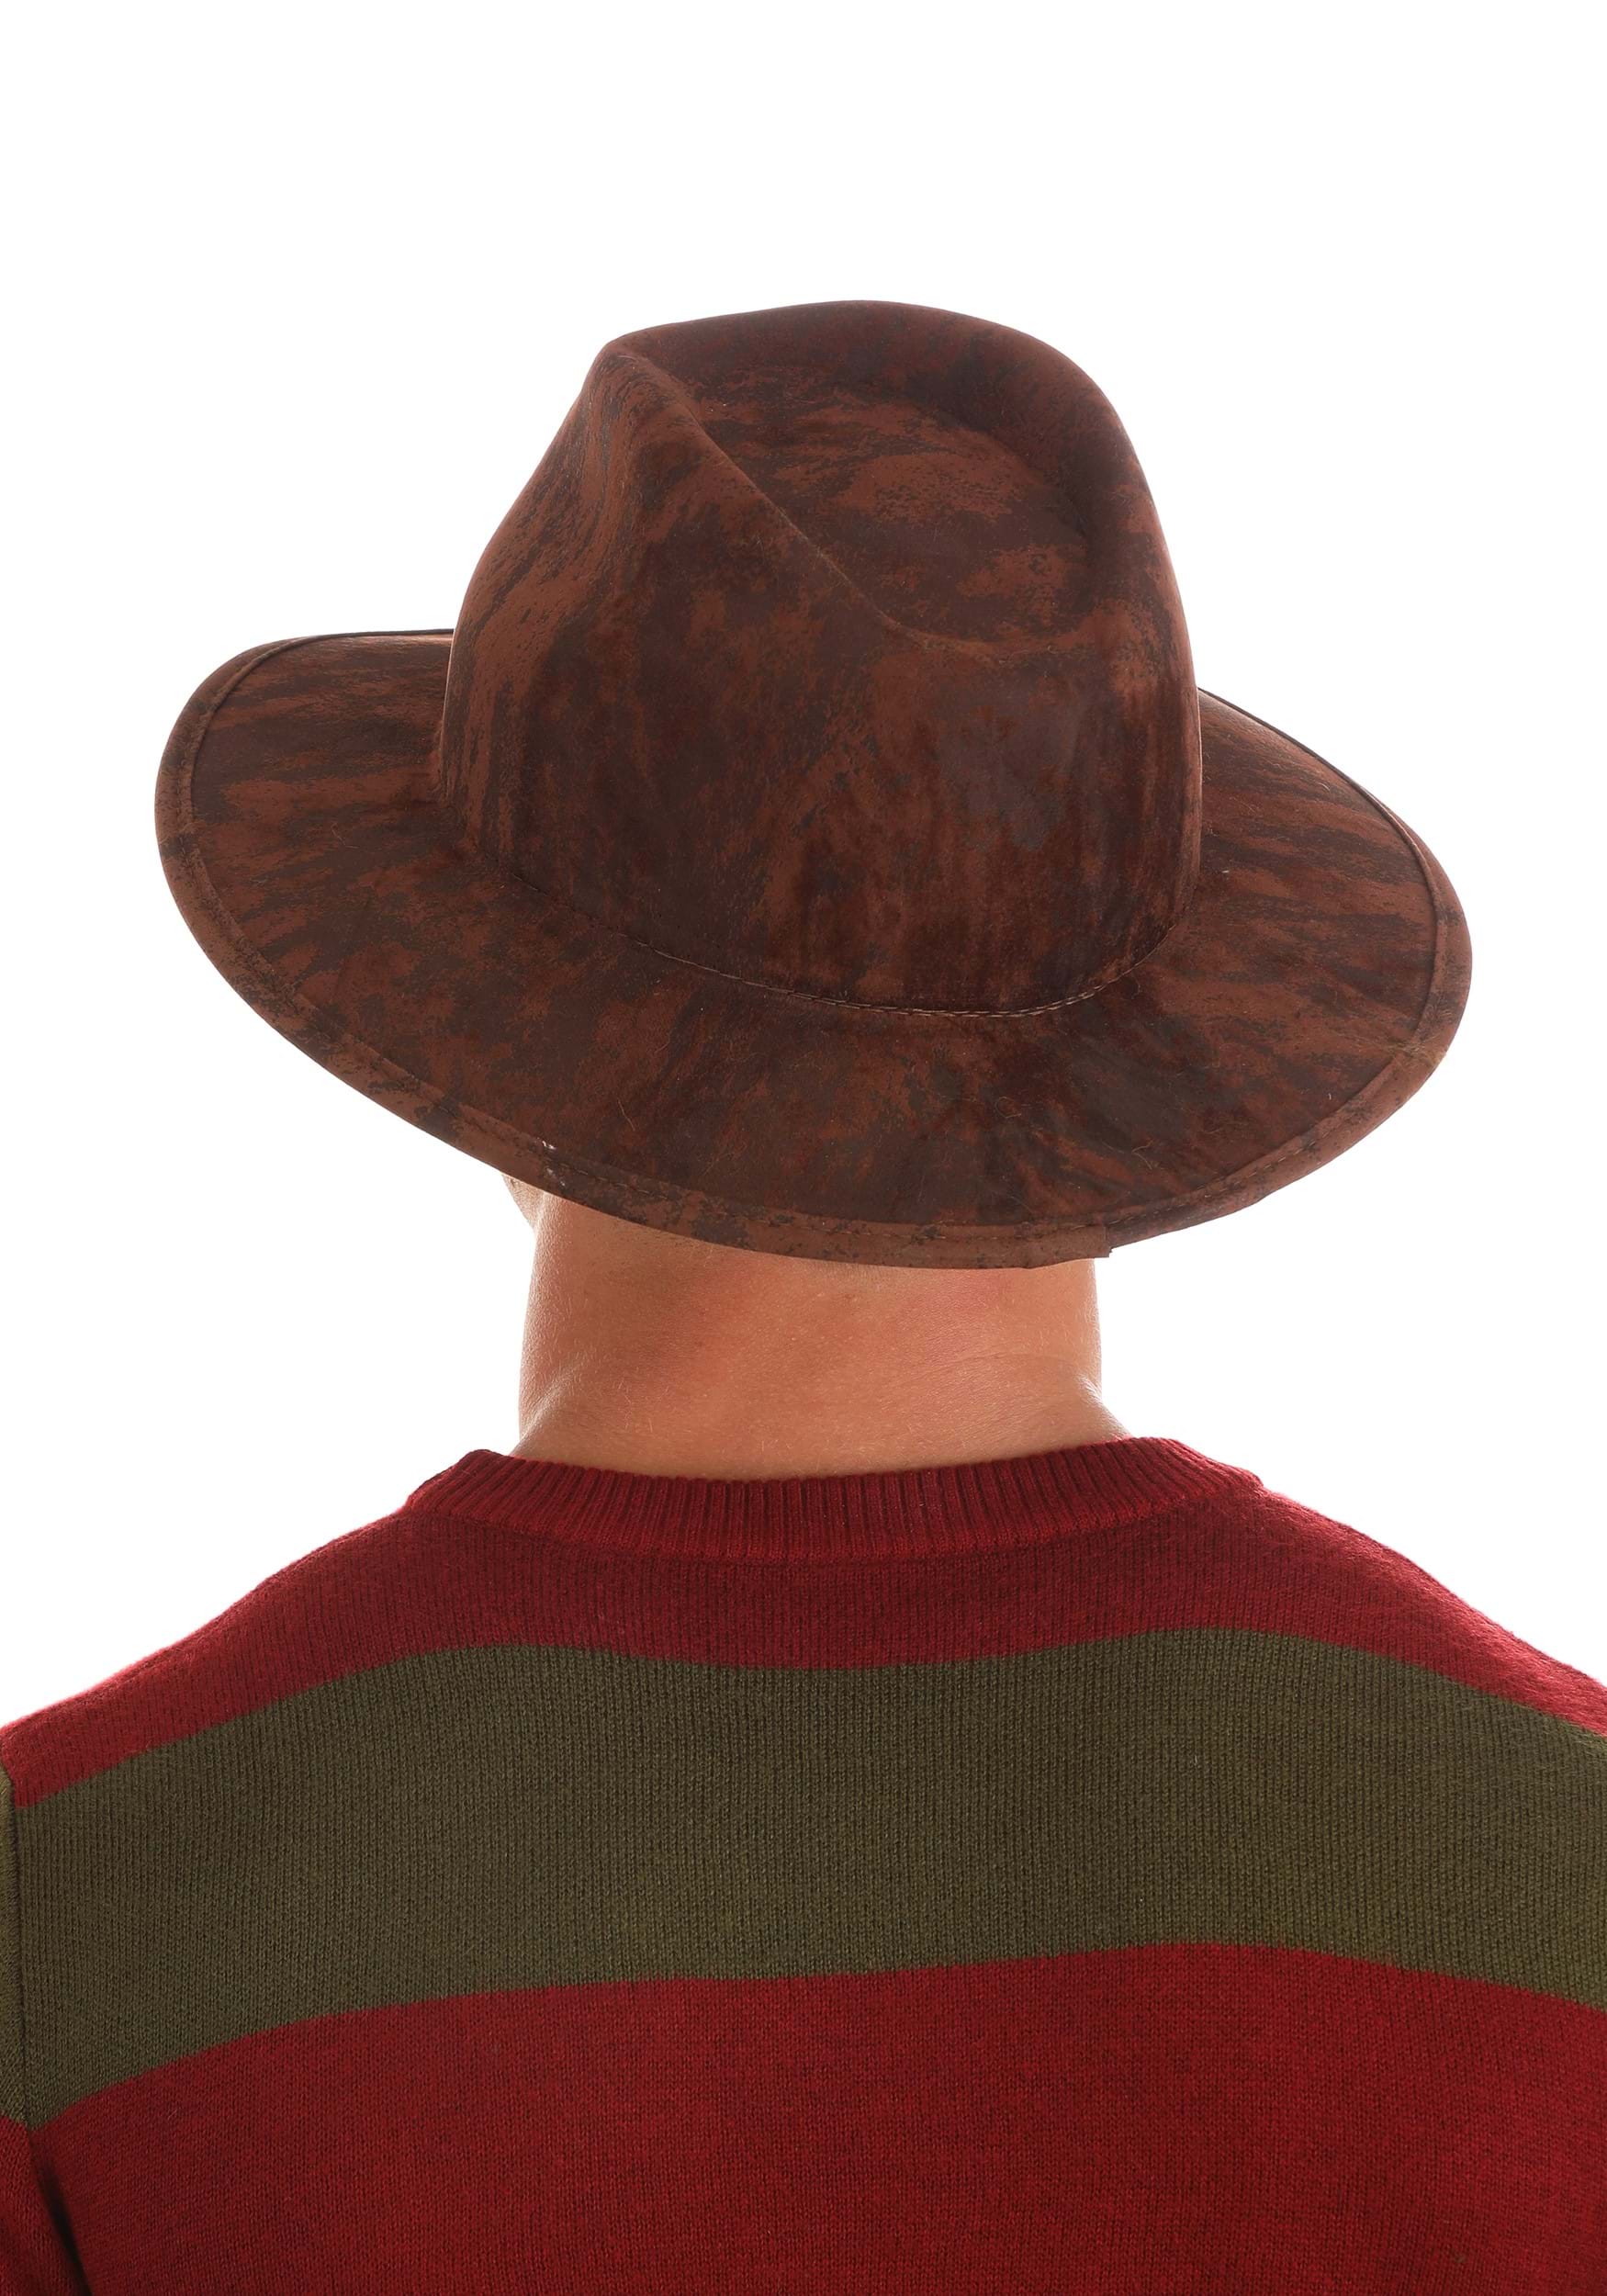 Dead Guy Costume Hat Accessory